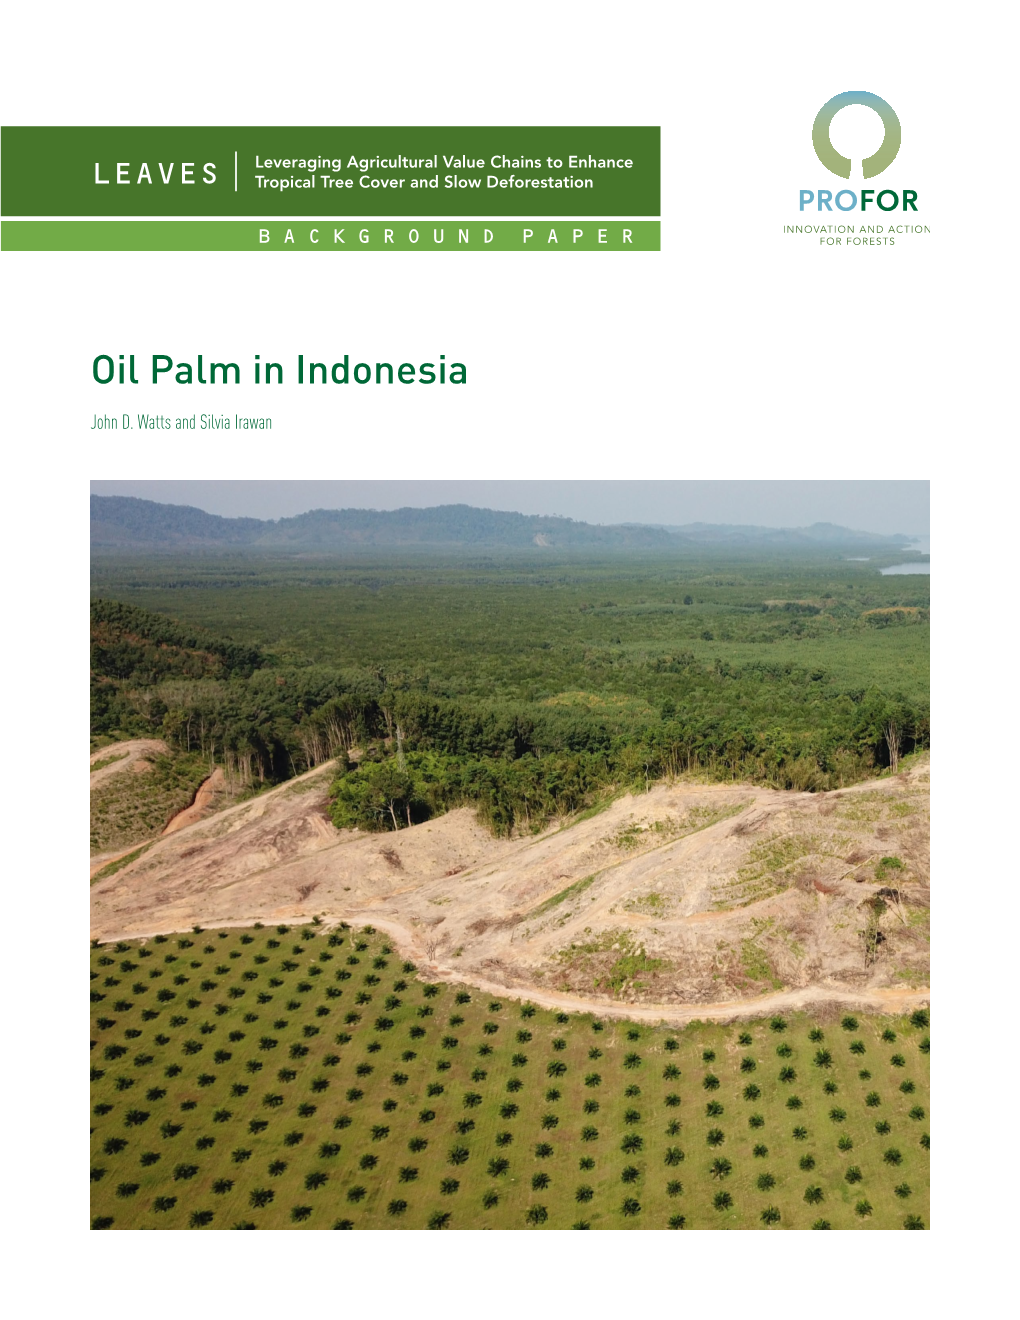 Oil Palm in Indonesia John D